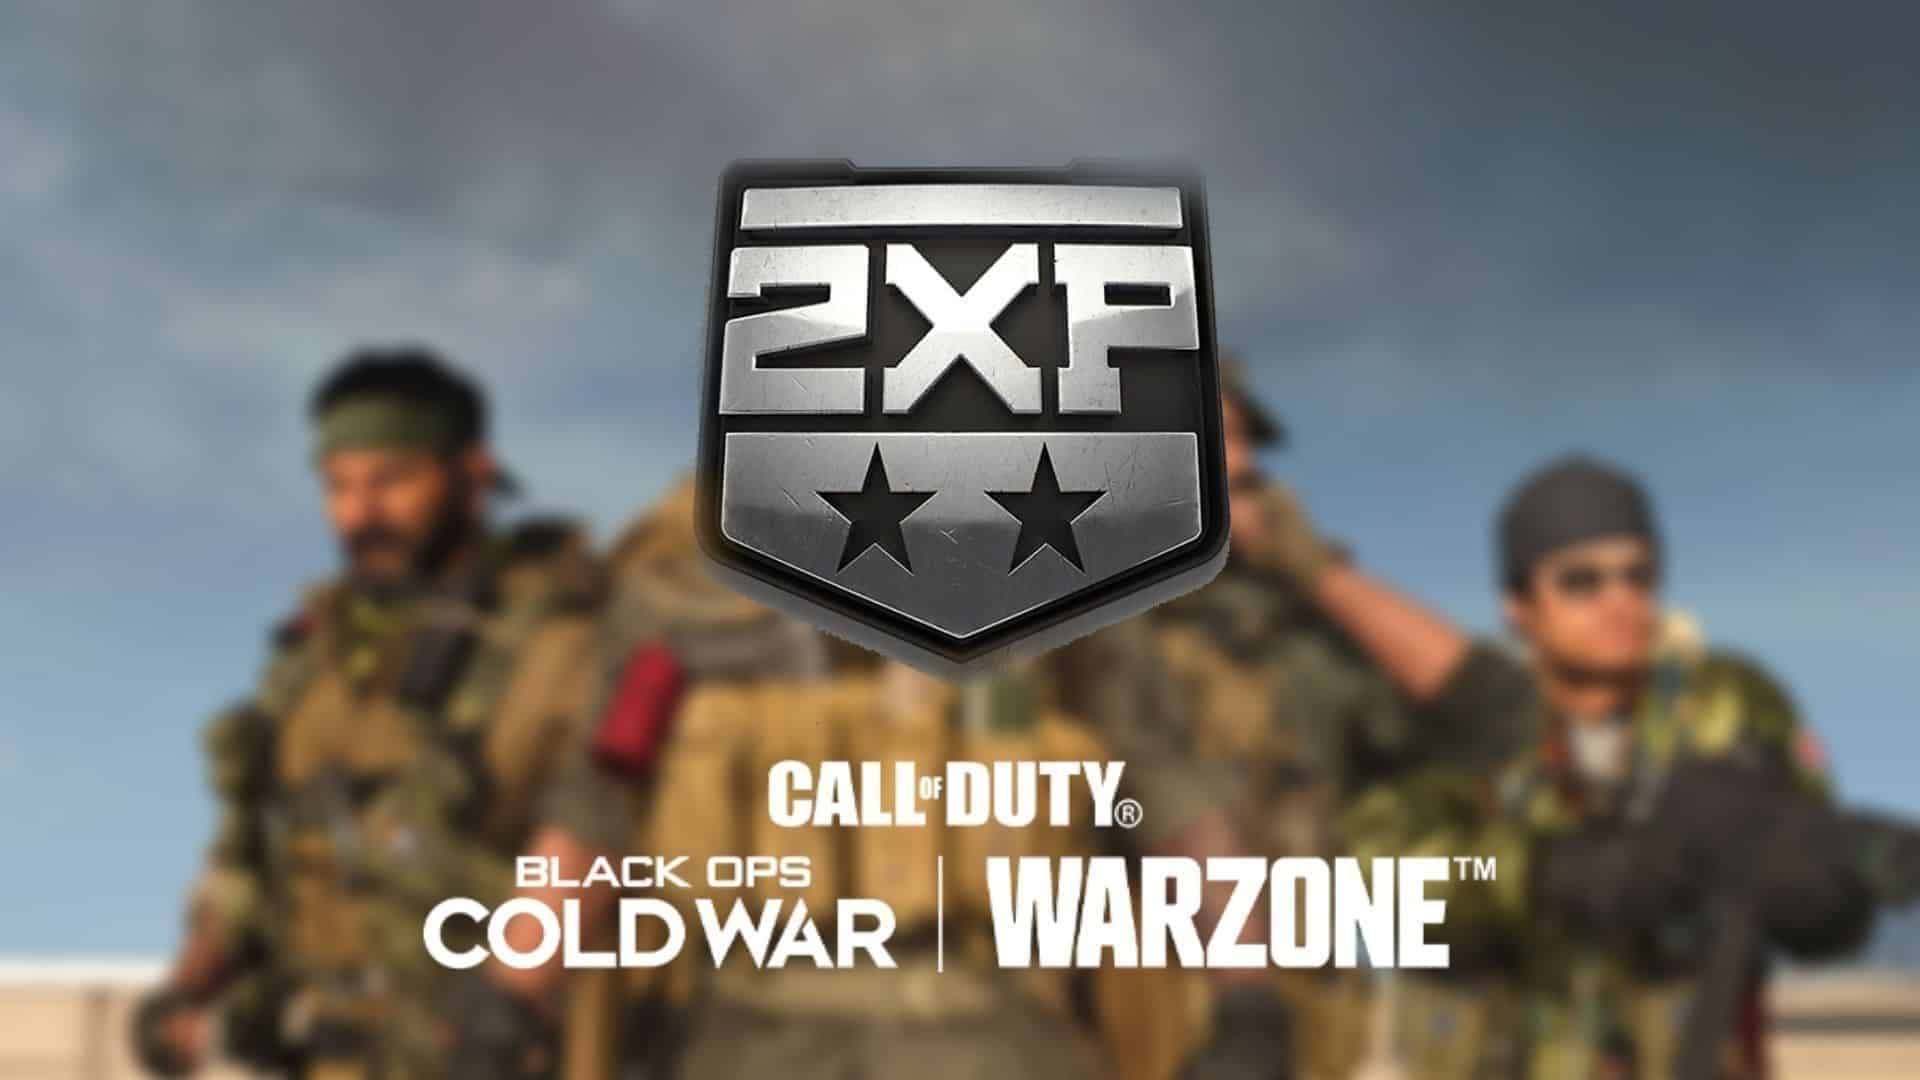 Double XP logos in Warzone